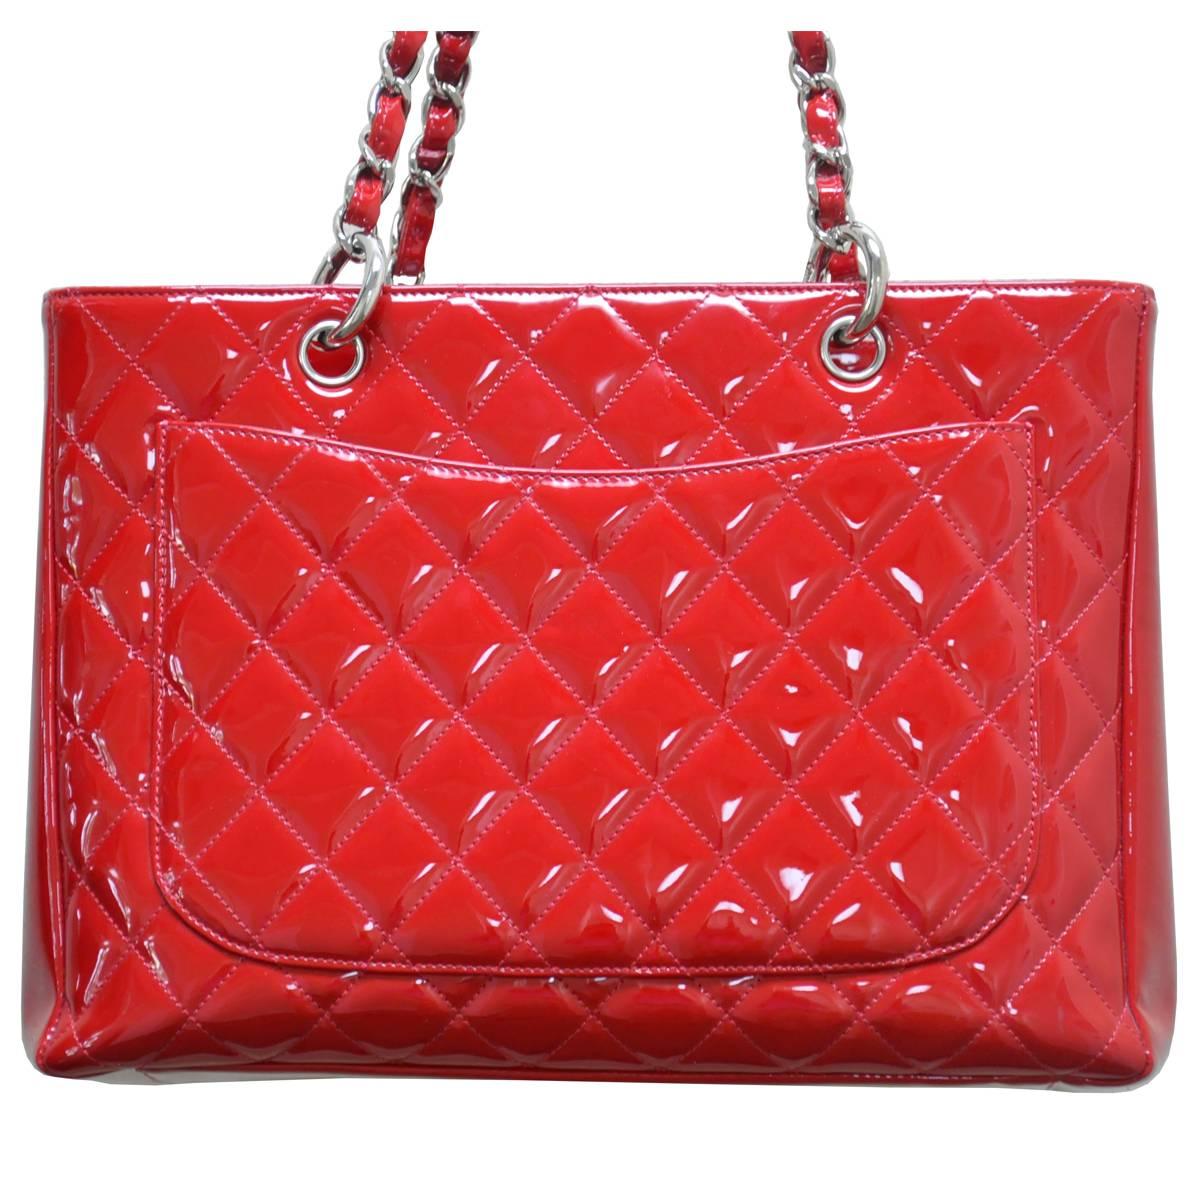 Chanel Red Patent Leather Grand Shopper Tote GST Handbag 1